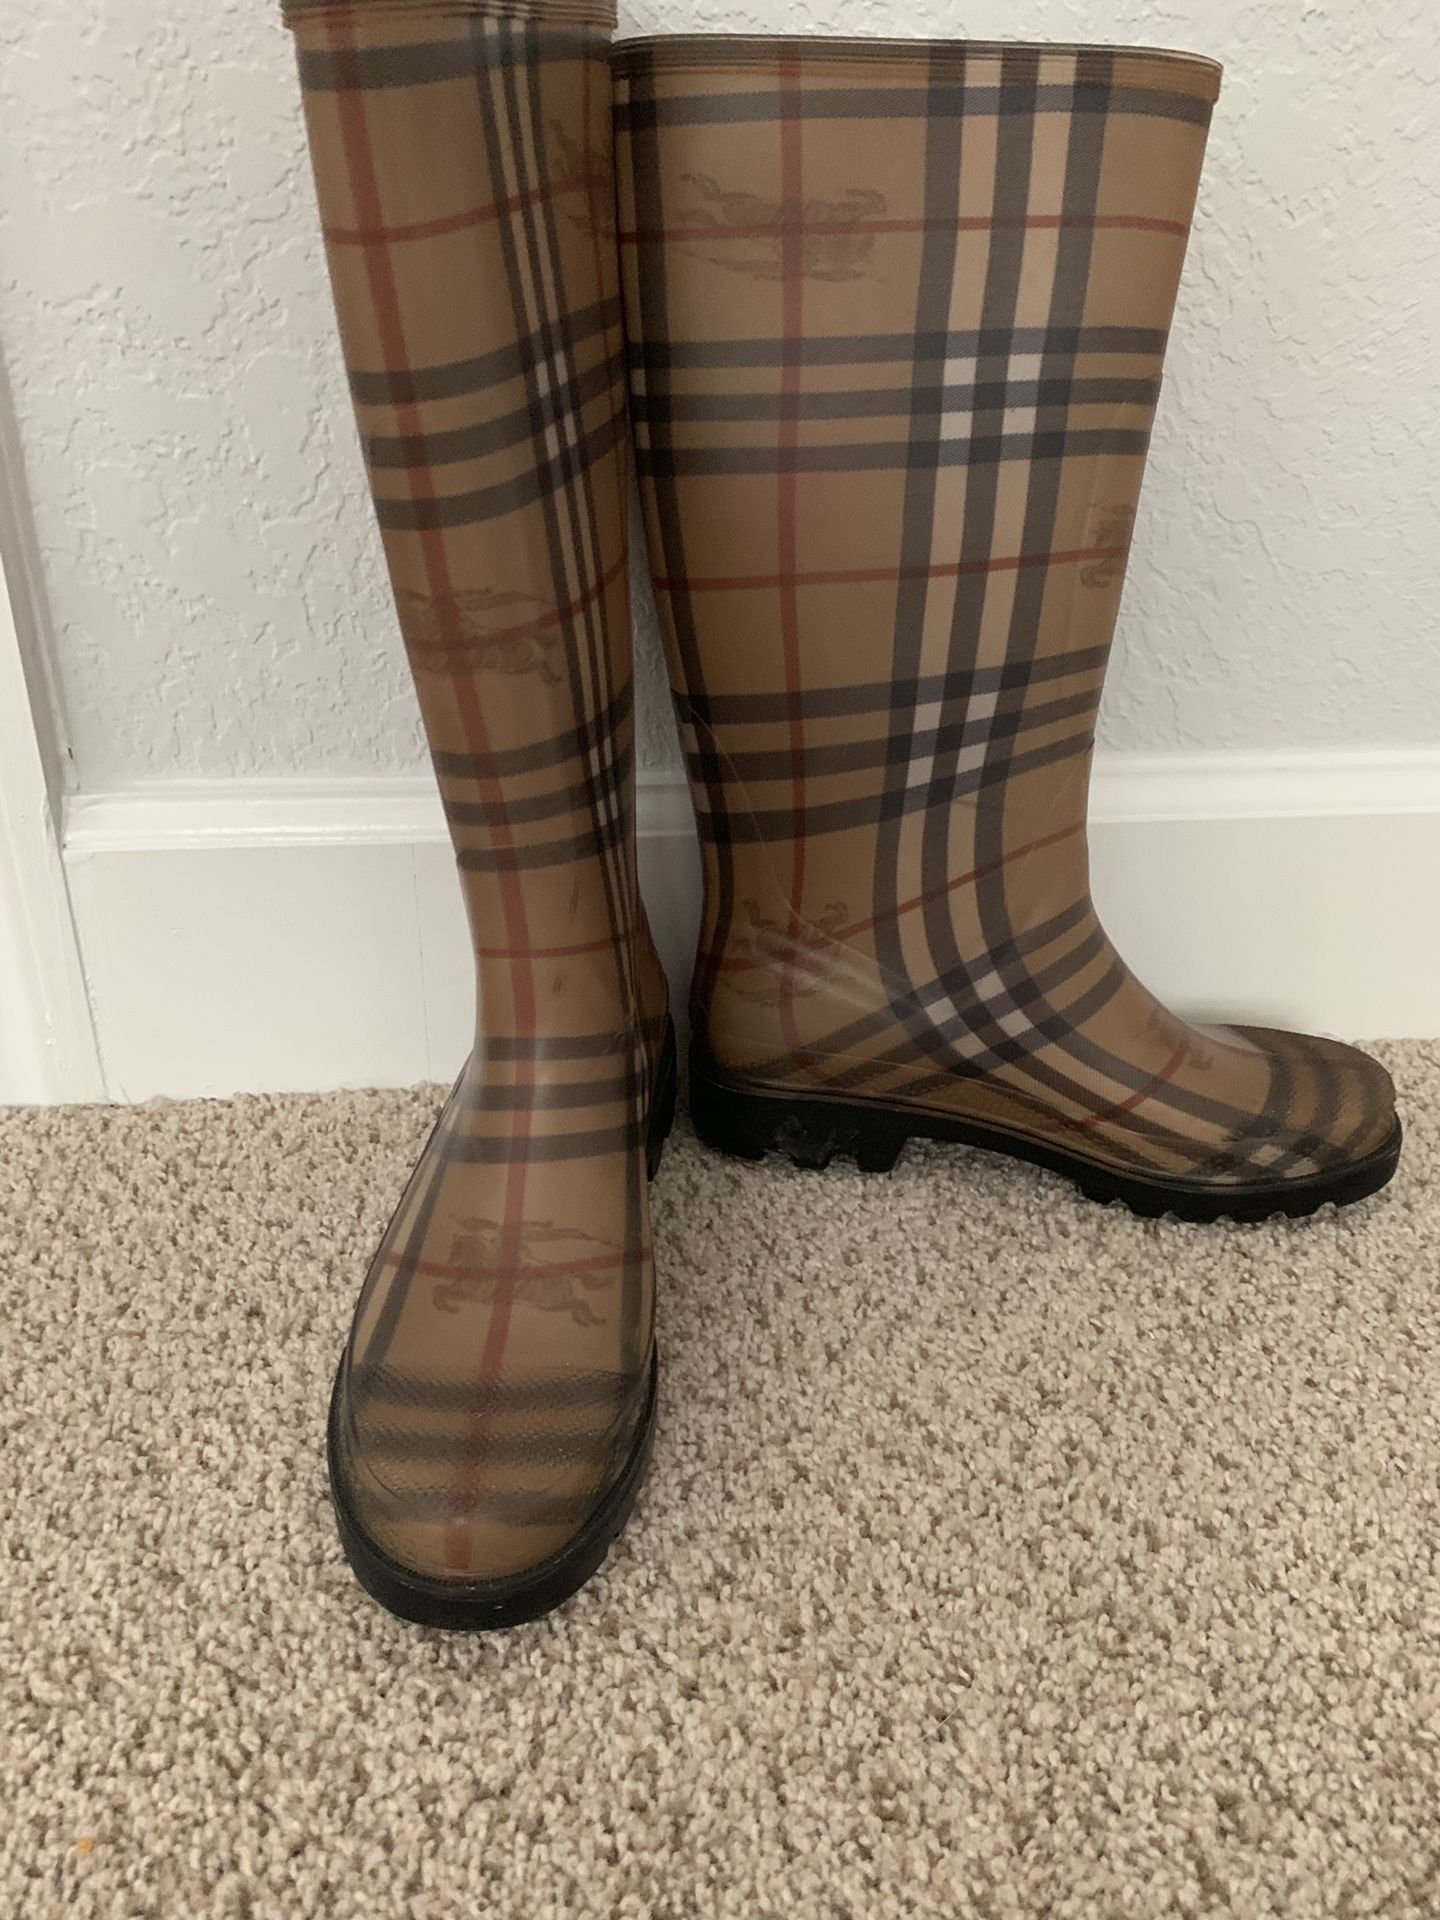 Authentic Burberry rain boots